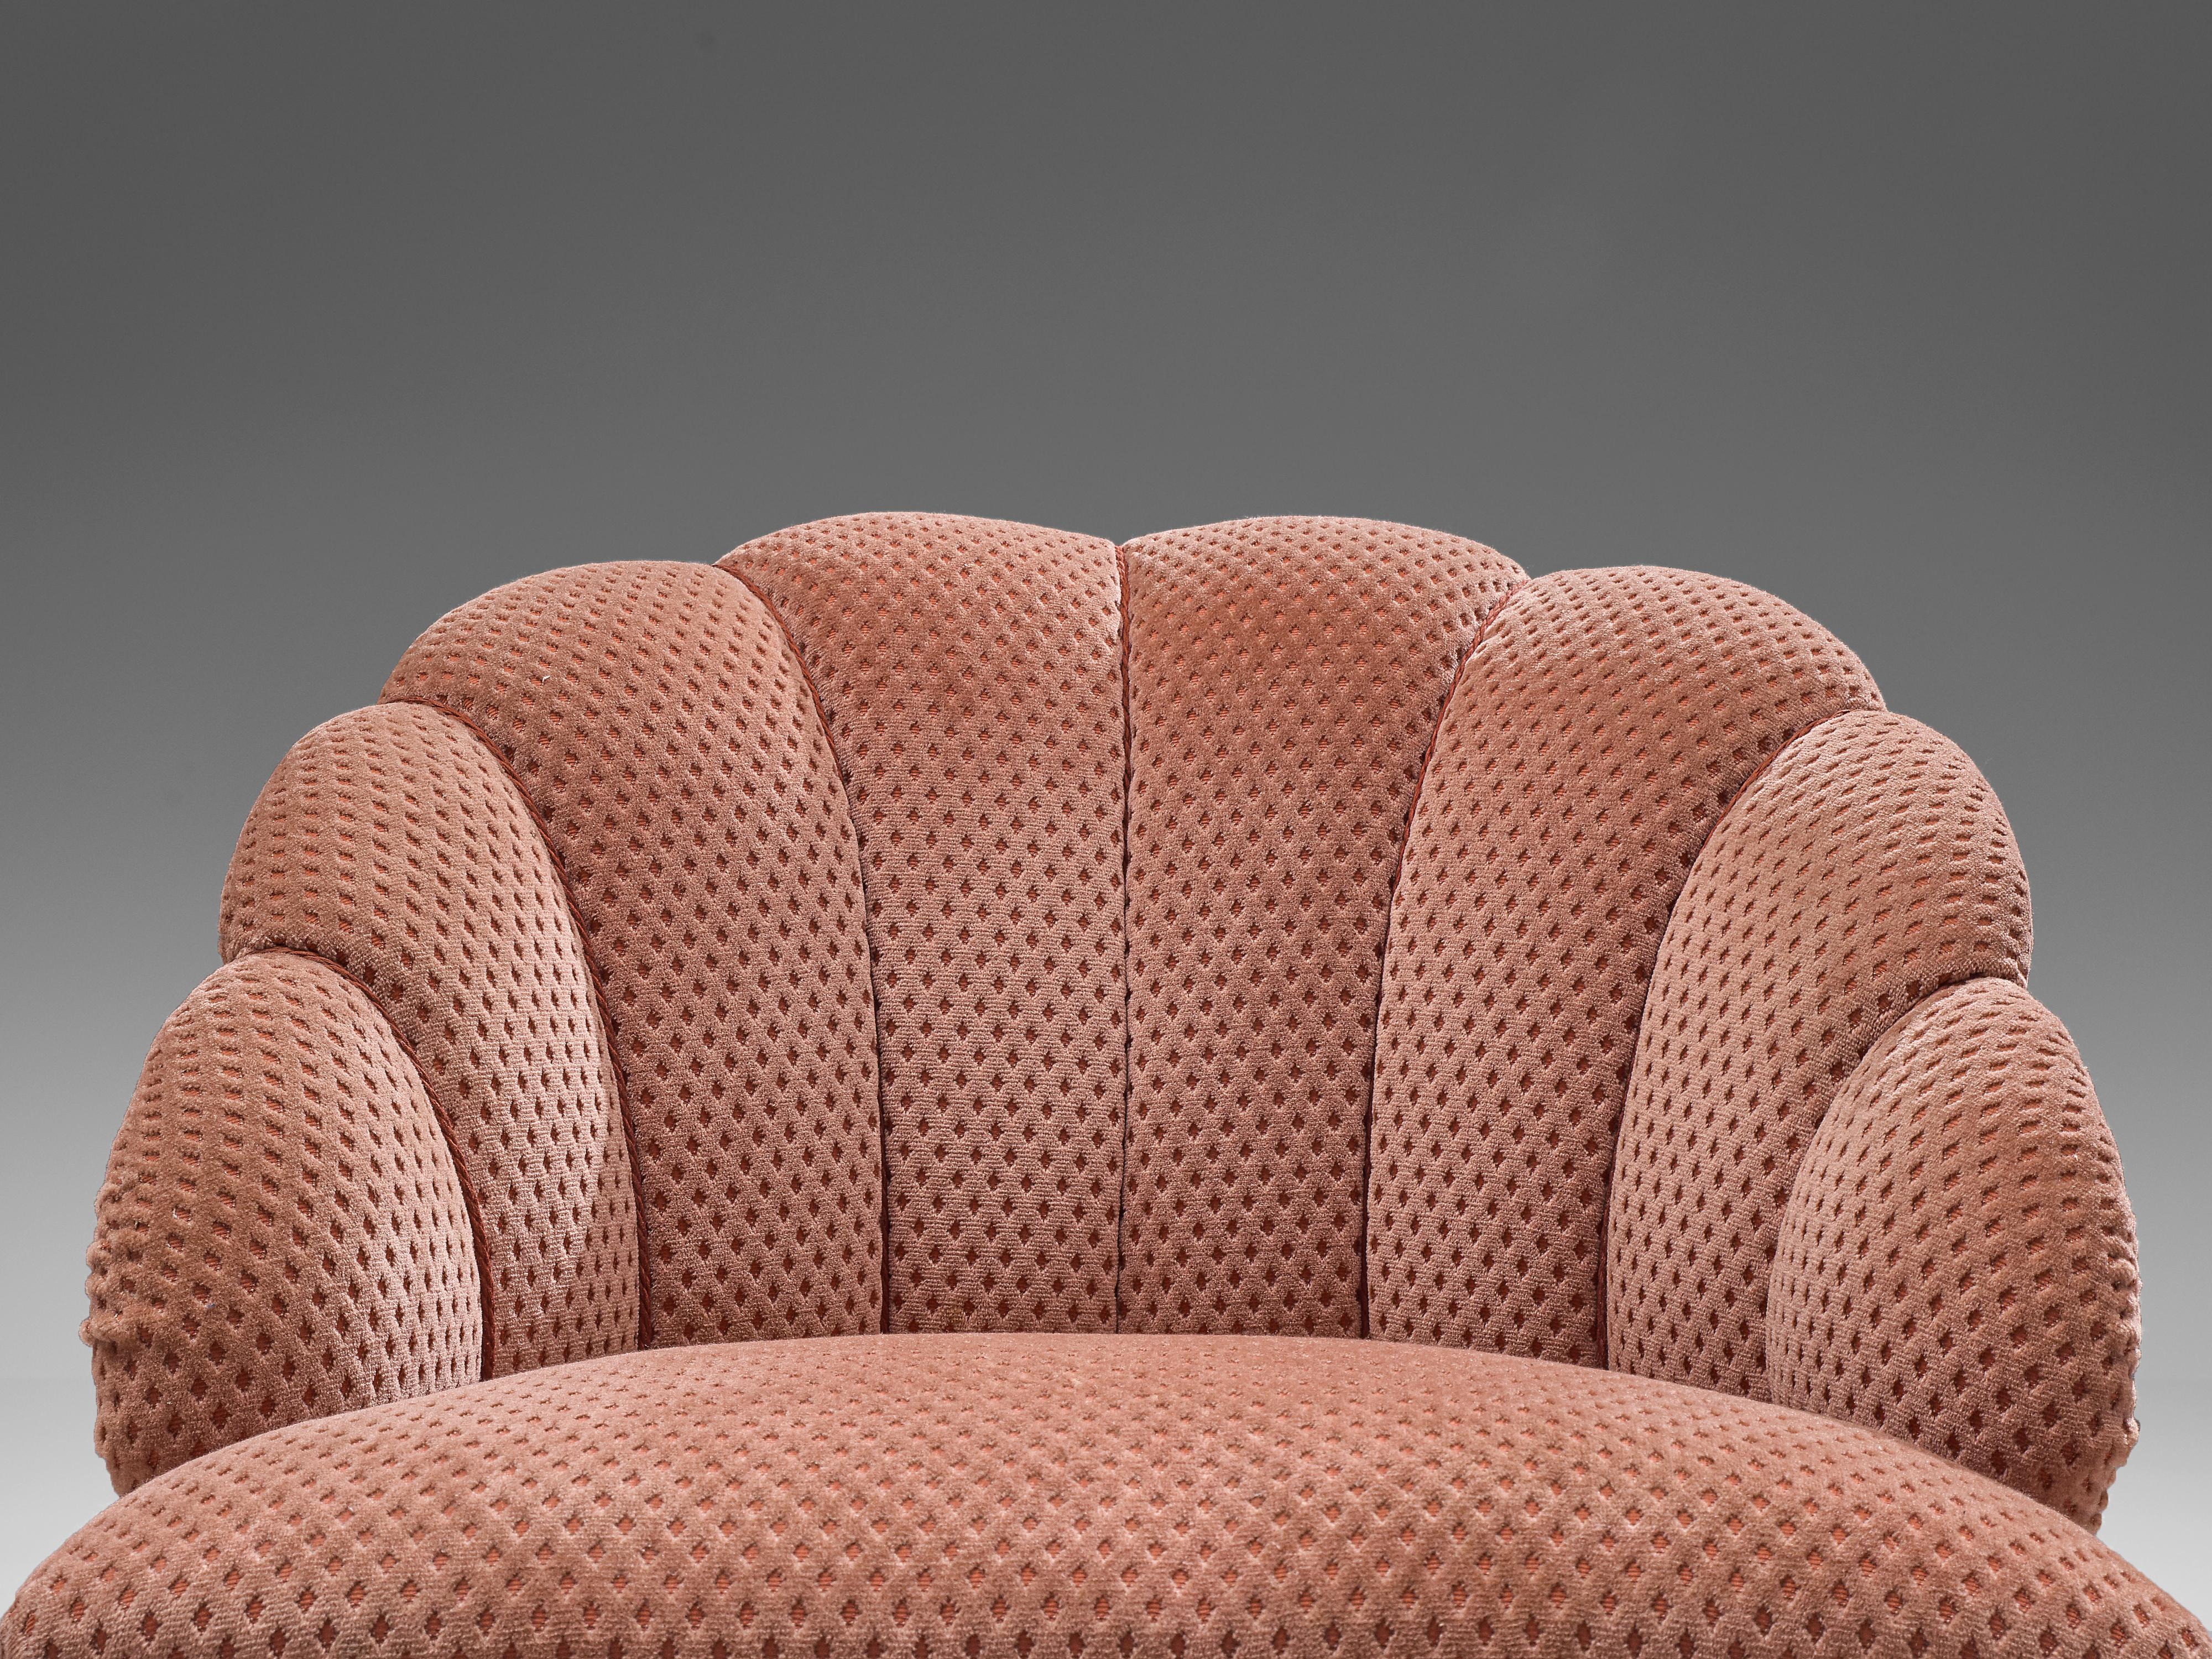 pink art deco chair